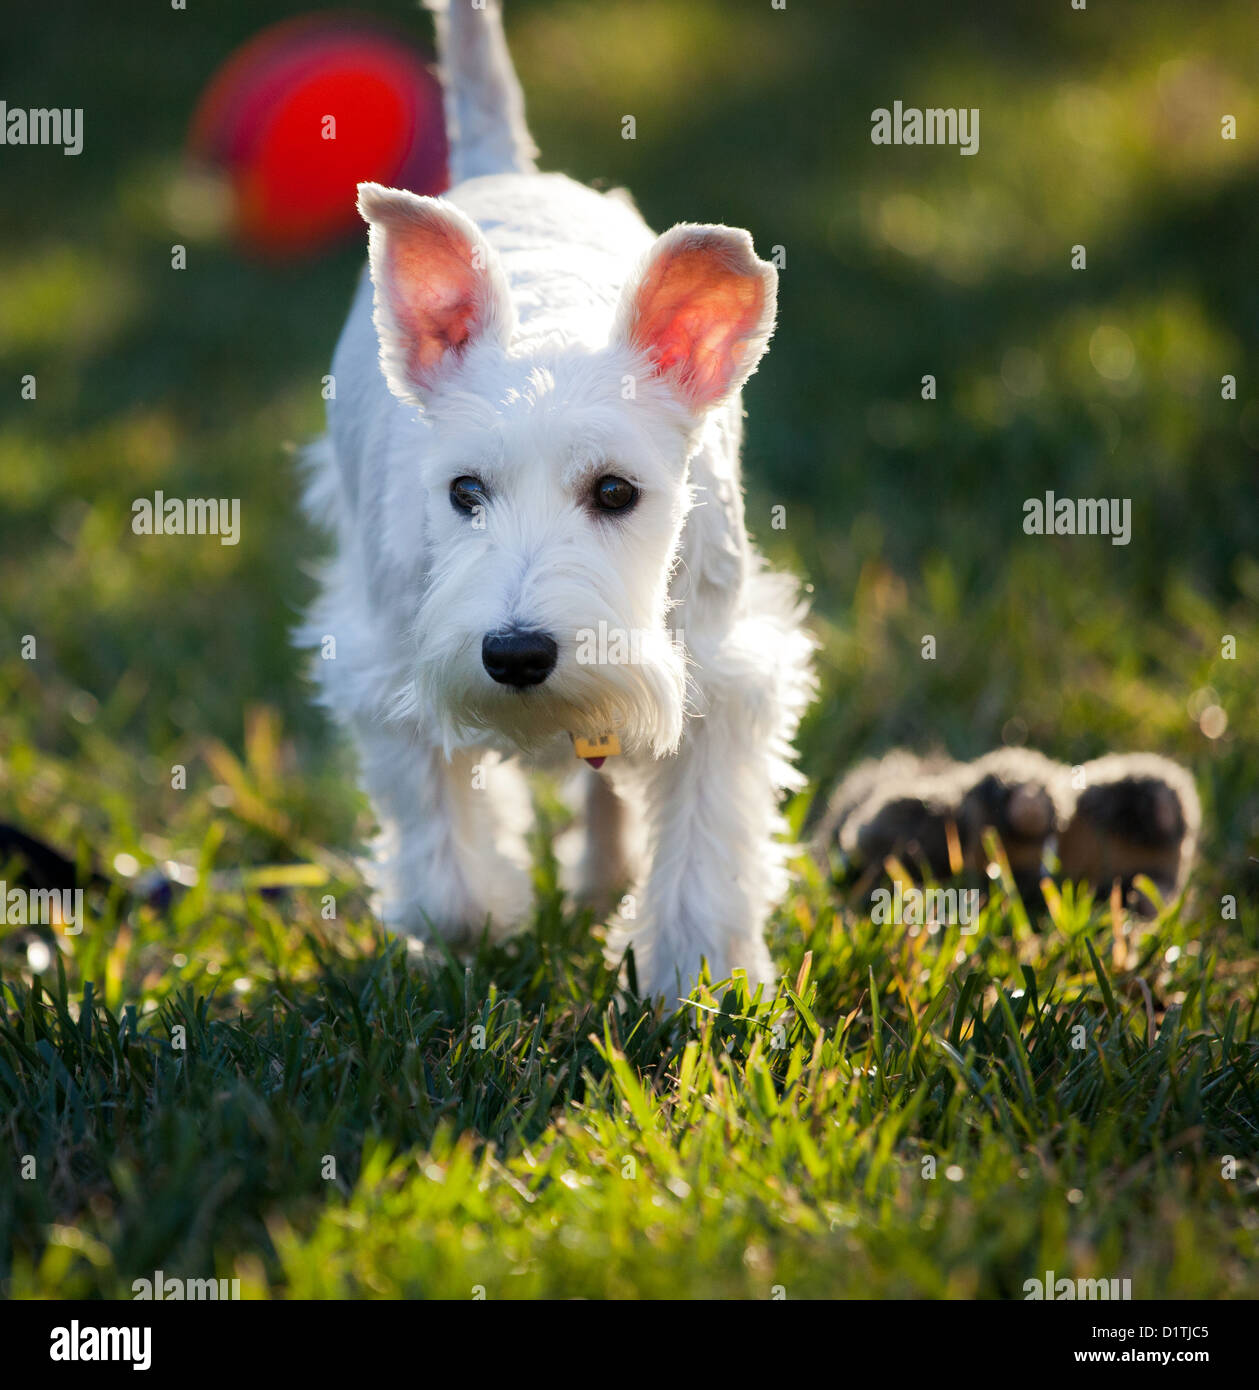 A white schnauzer schnoodle dog. Stock Photo